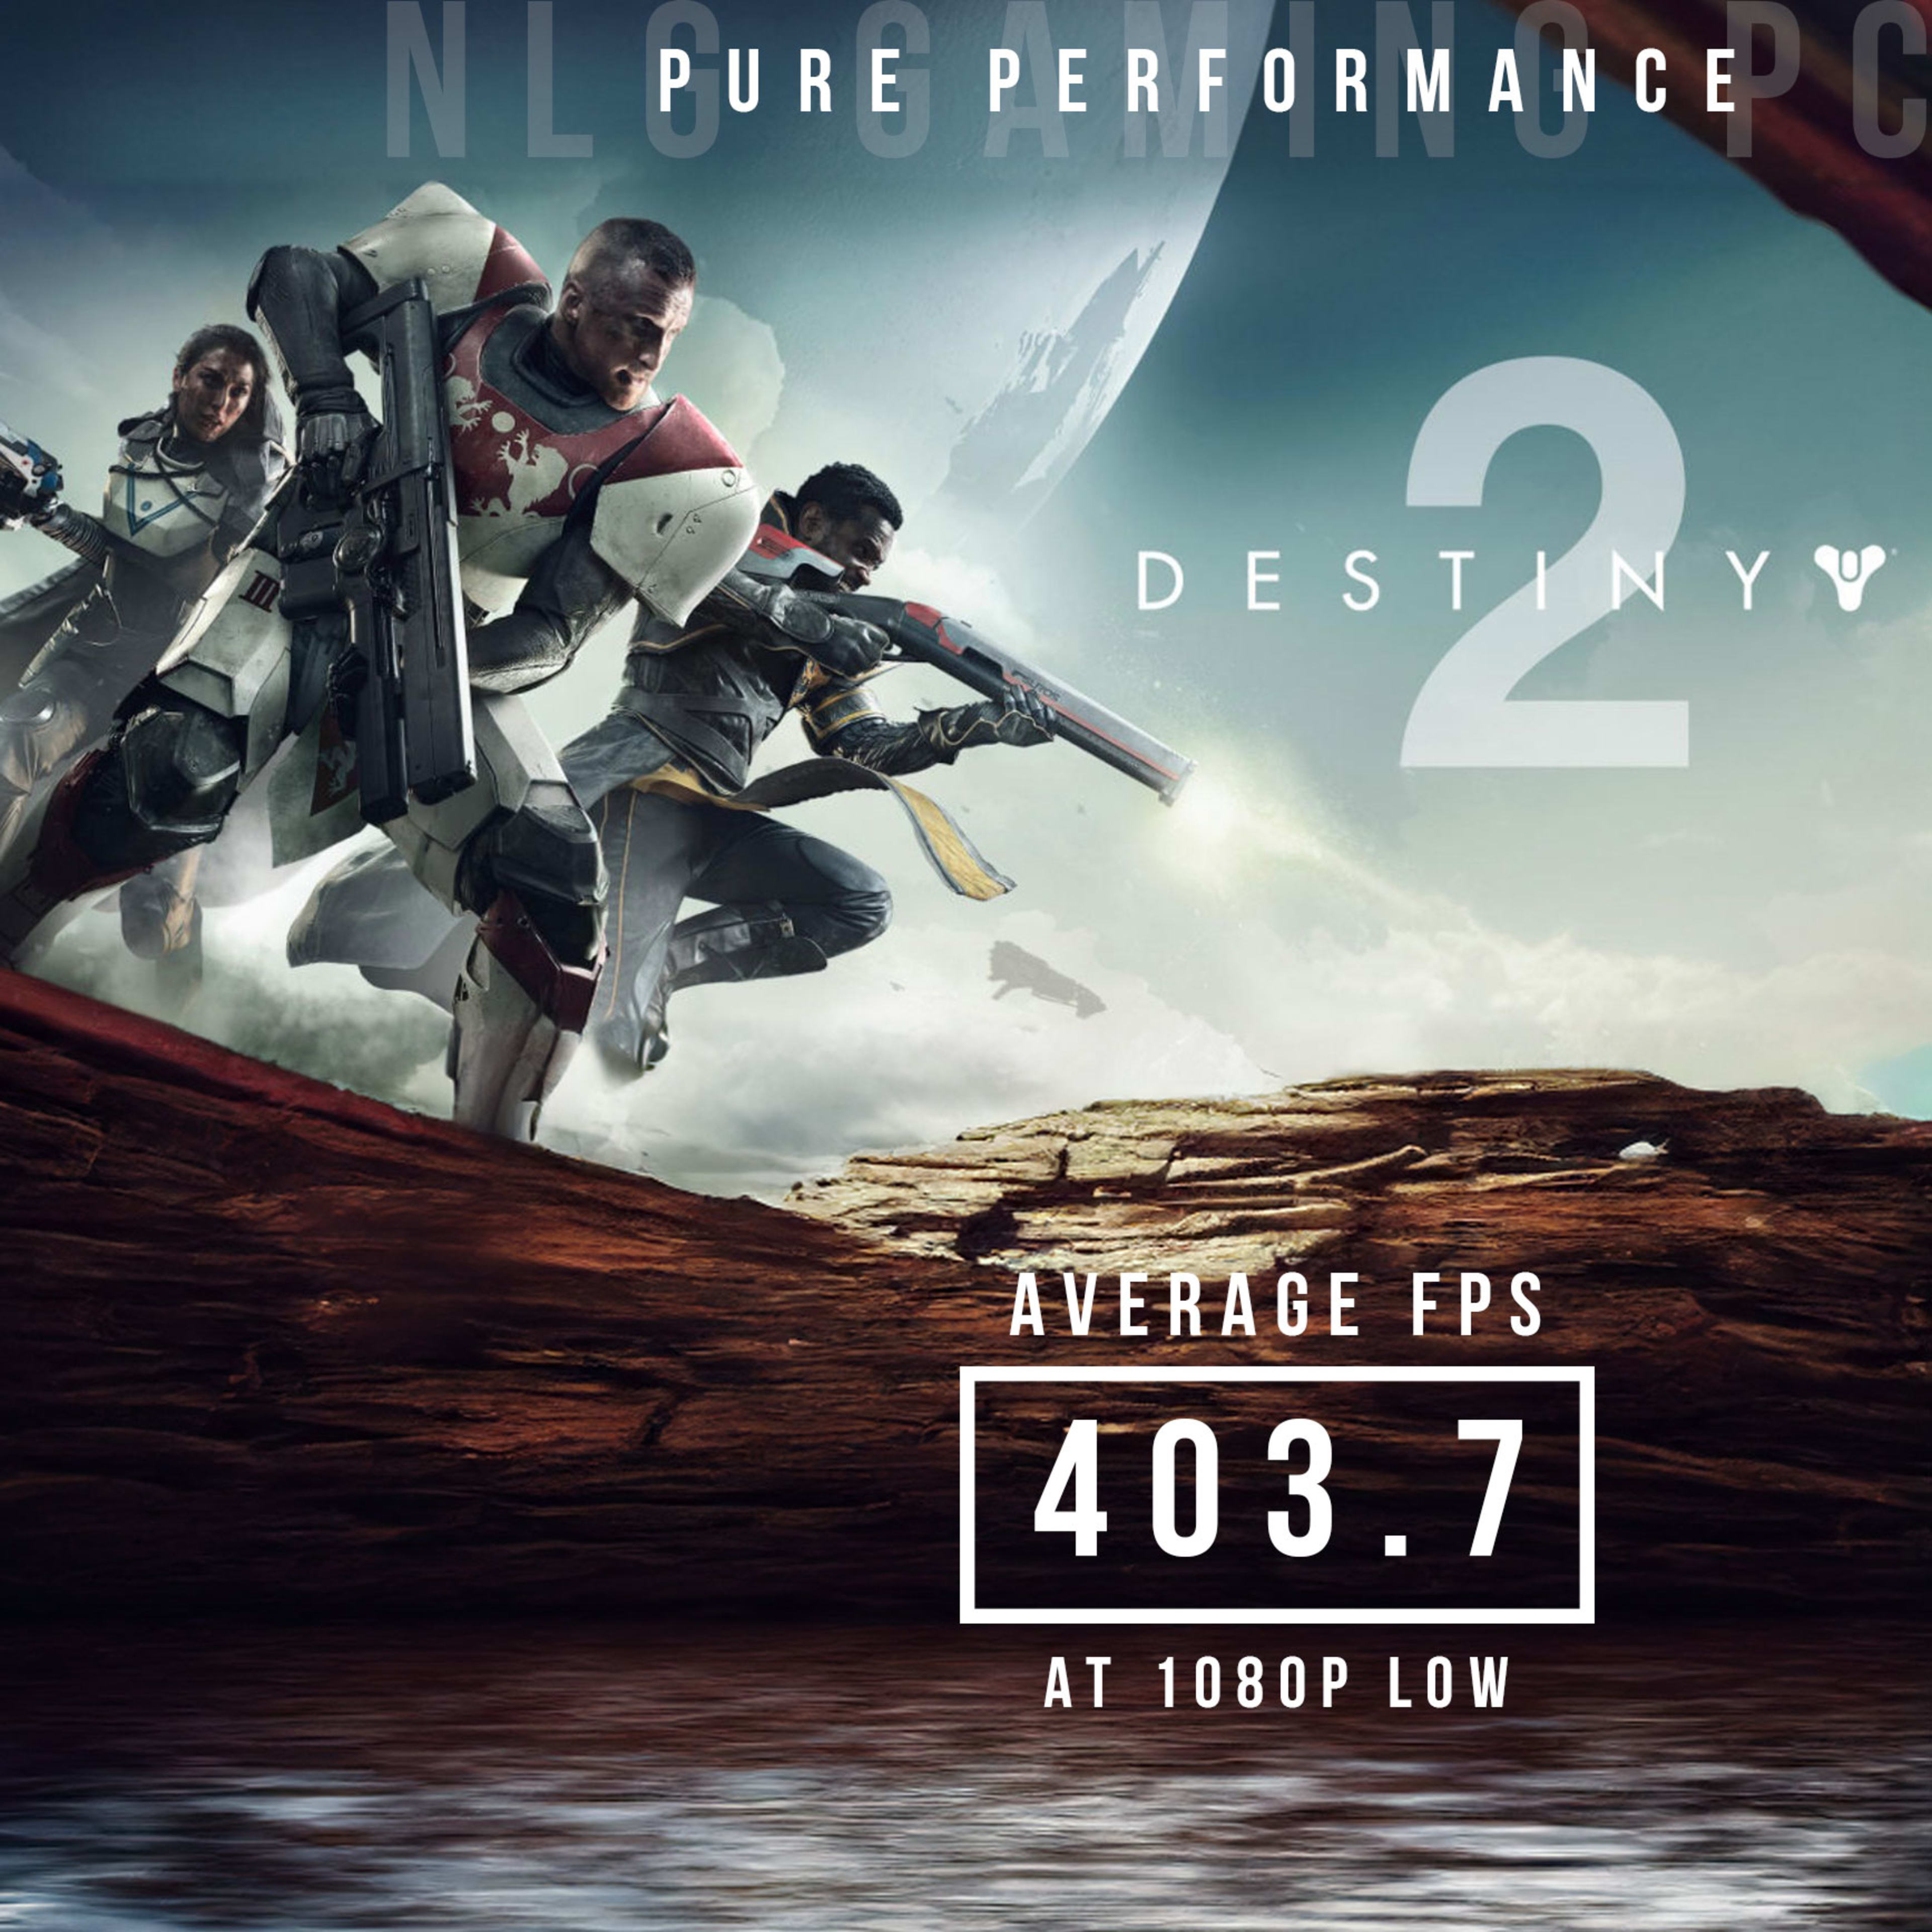 ⚡️ Pure Performance Gaming PC | Ryzen 5 2600, Nvidia RTX 2060, 16GB RAM, 512GB M.2 SSD, WIFI & BT